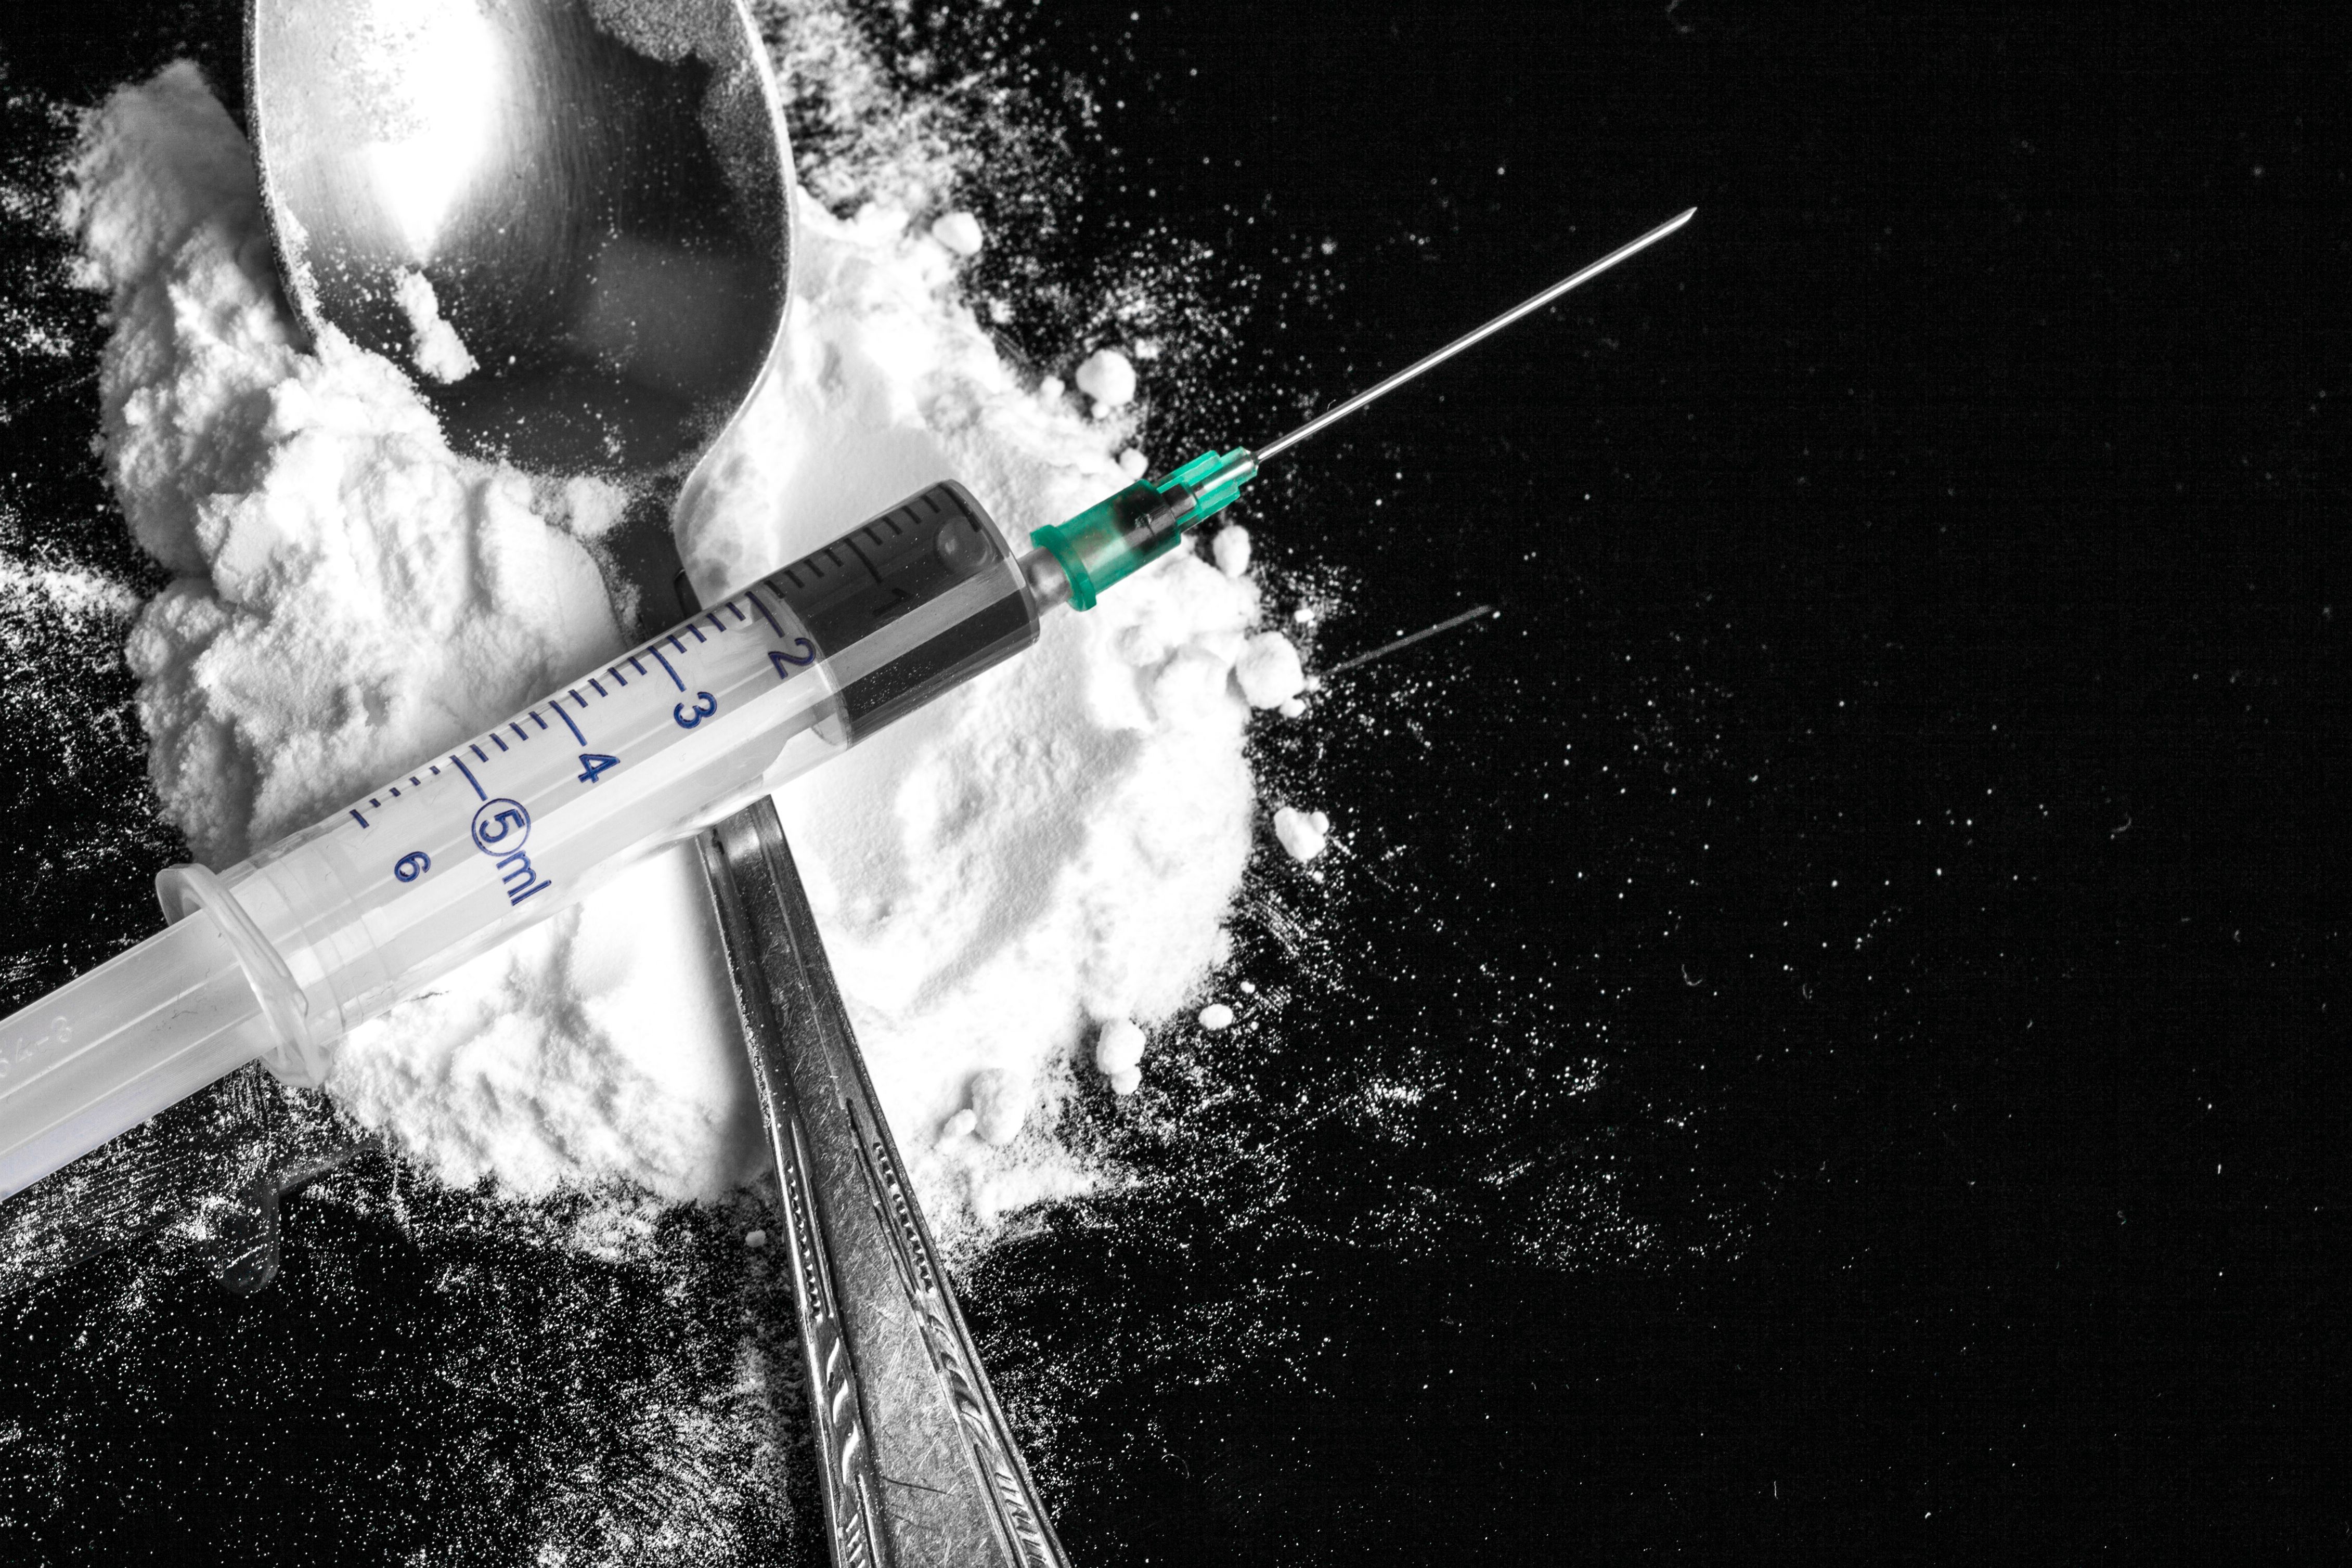 Drug syringe and heroin on spoon